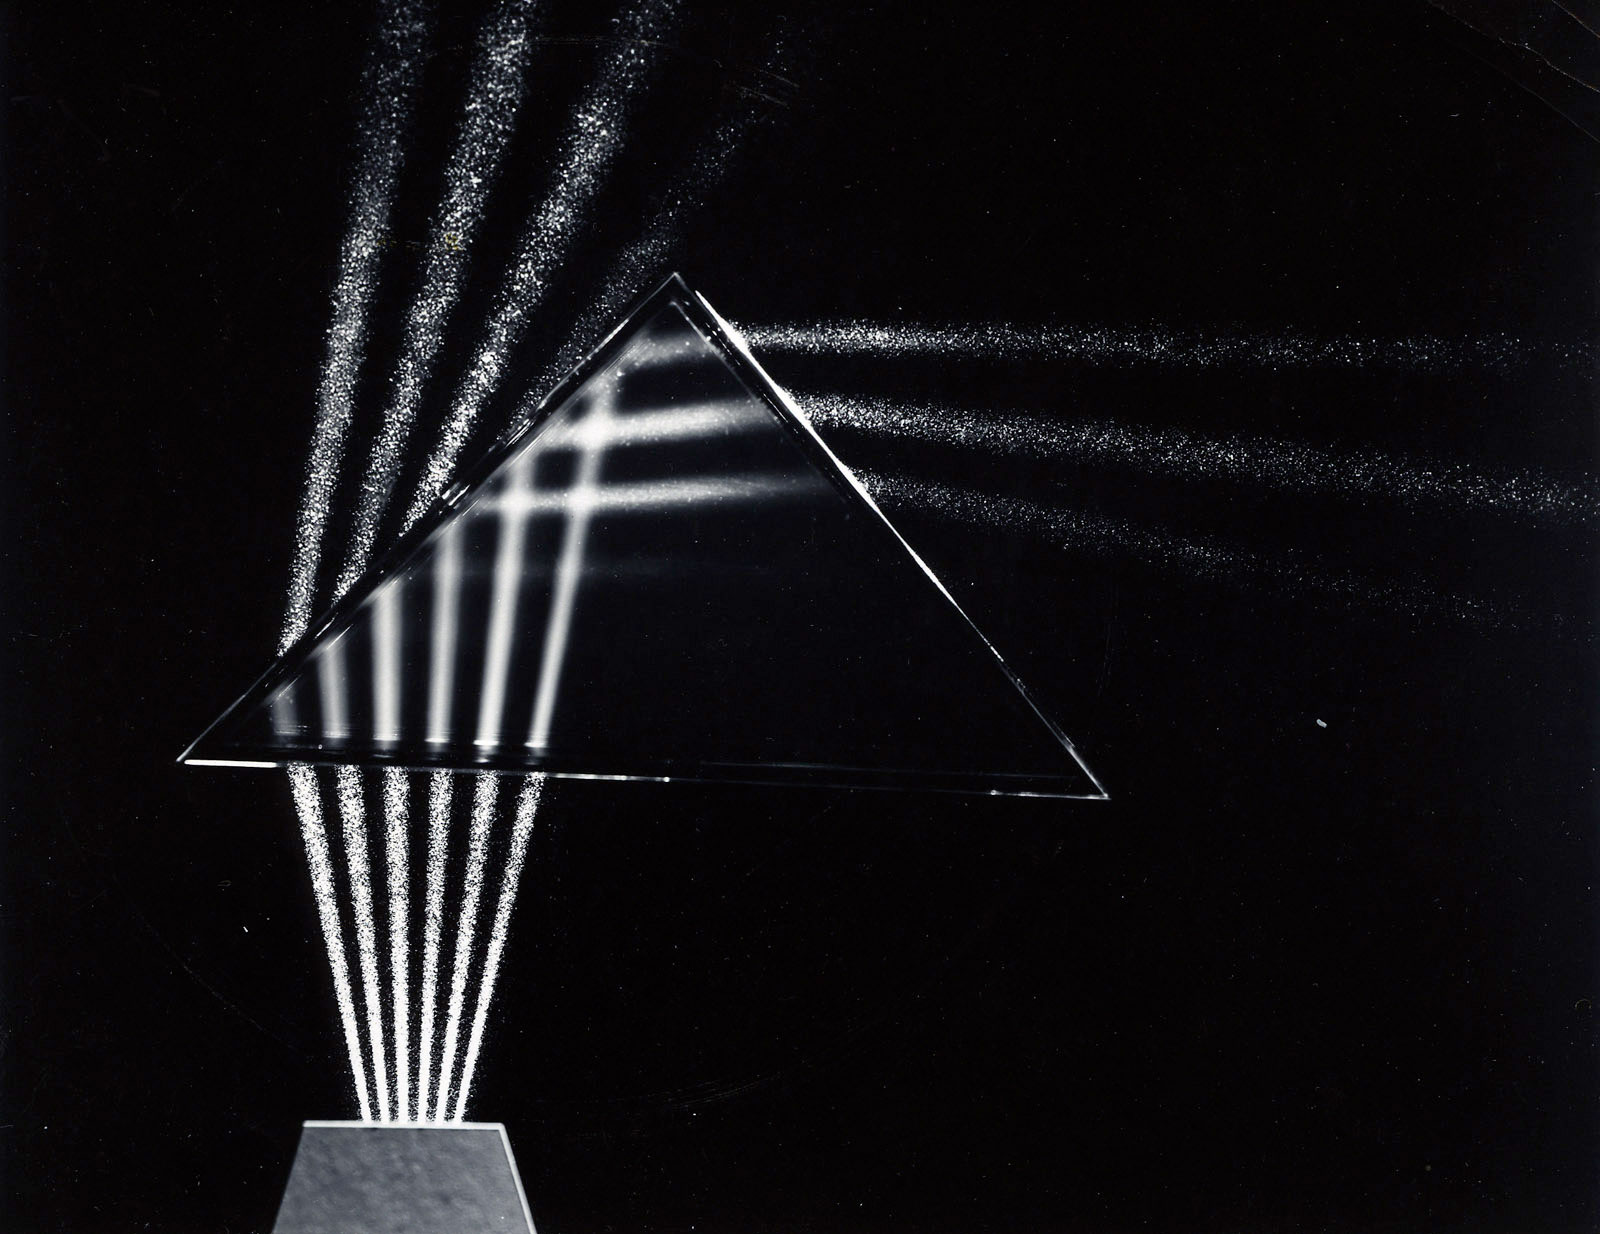 Light through prism, Cambridge, Massachussetts, 1958-61